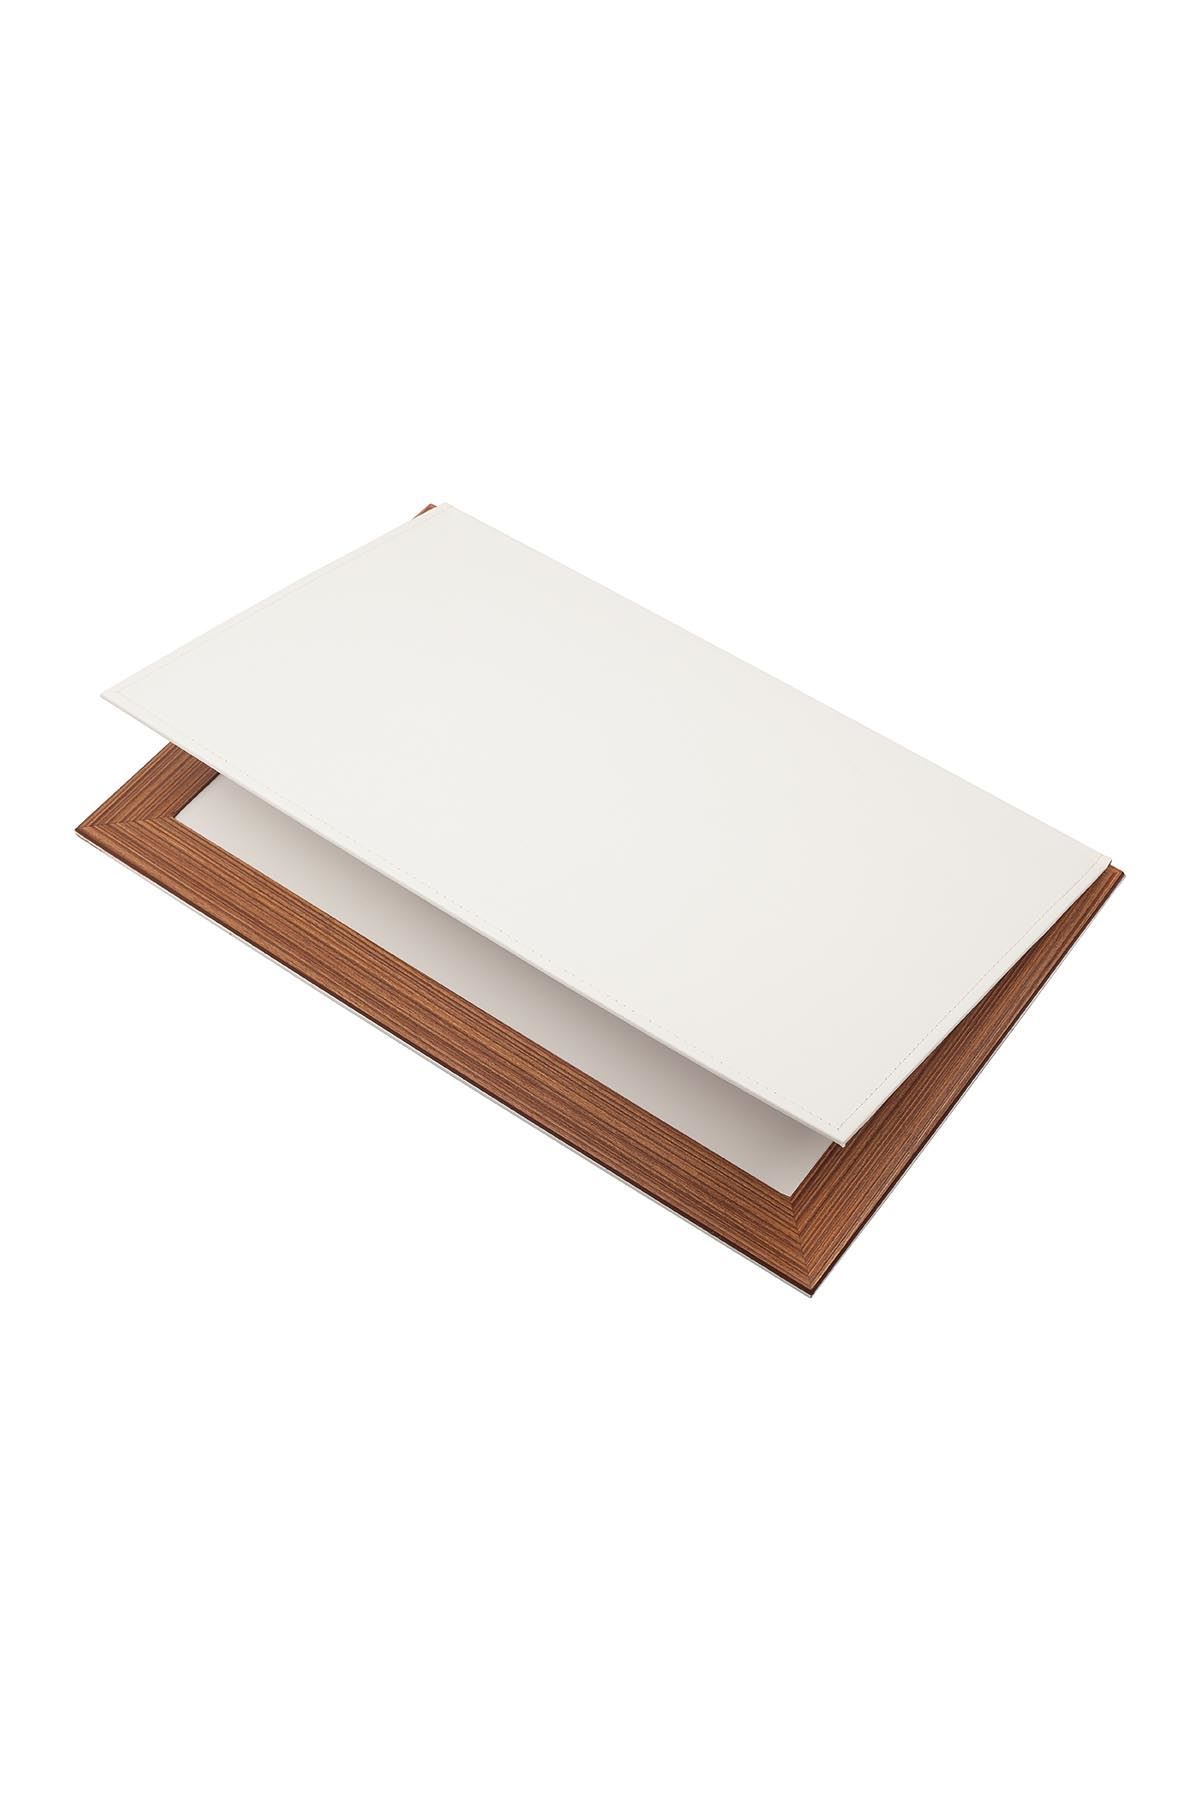 Star Lux Leather Desk Set White 10 Accessories